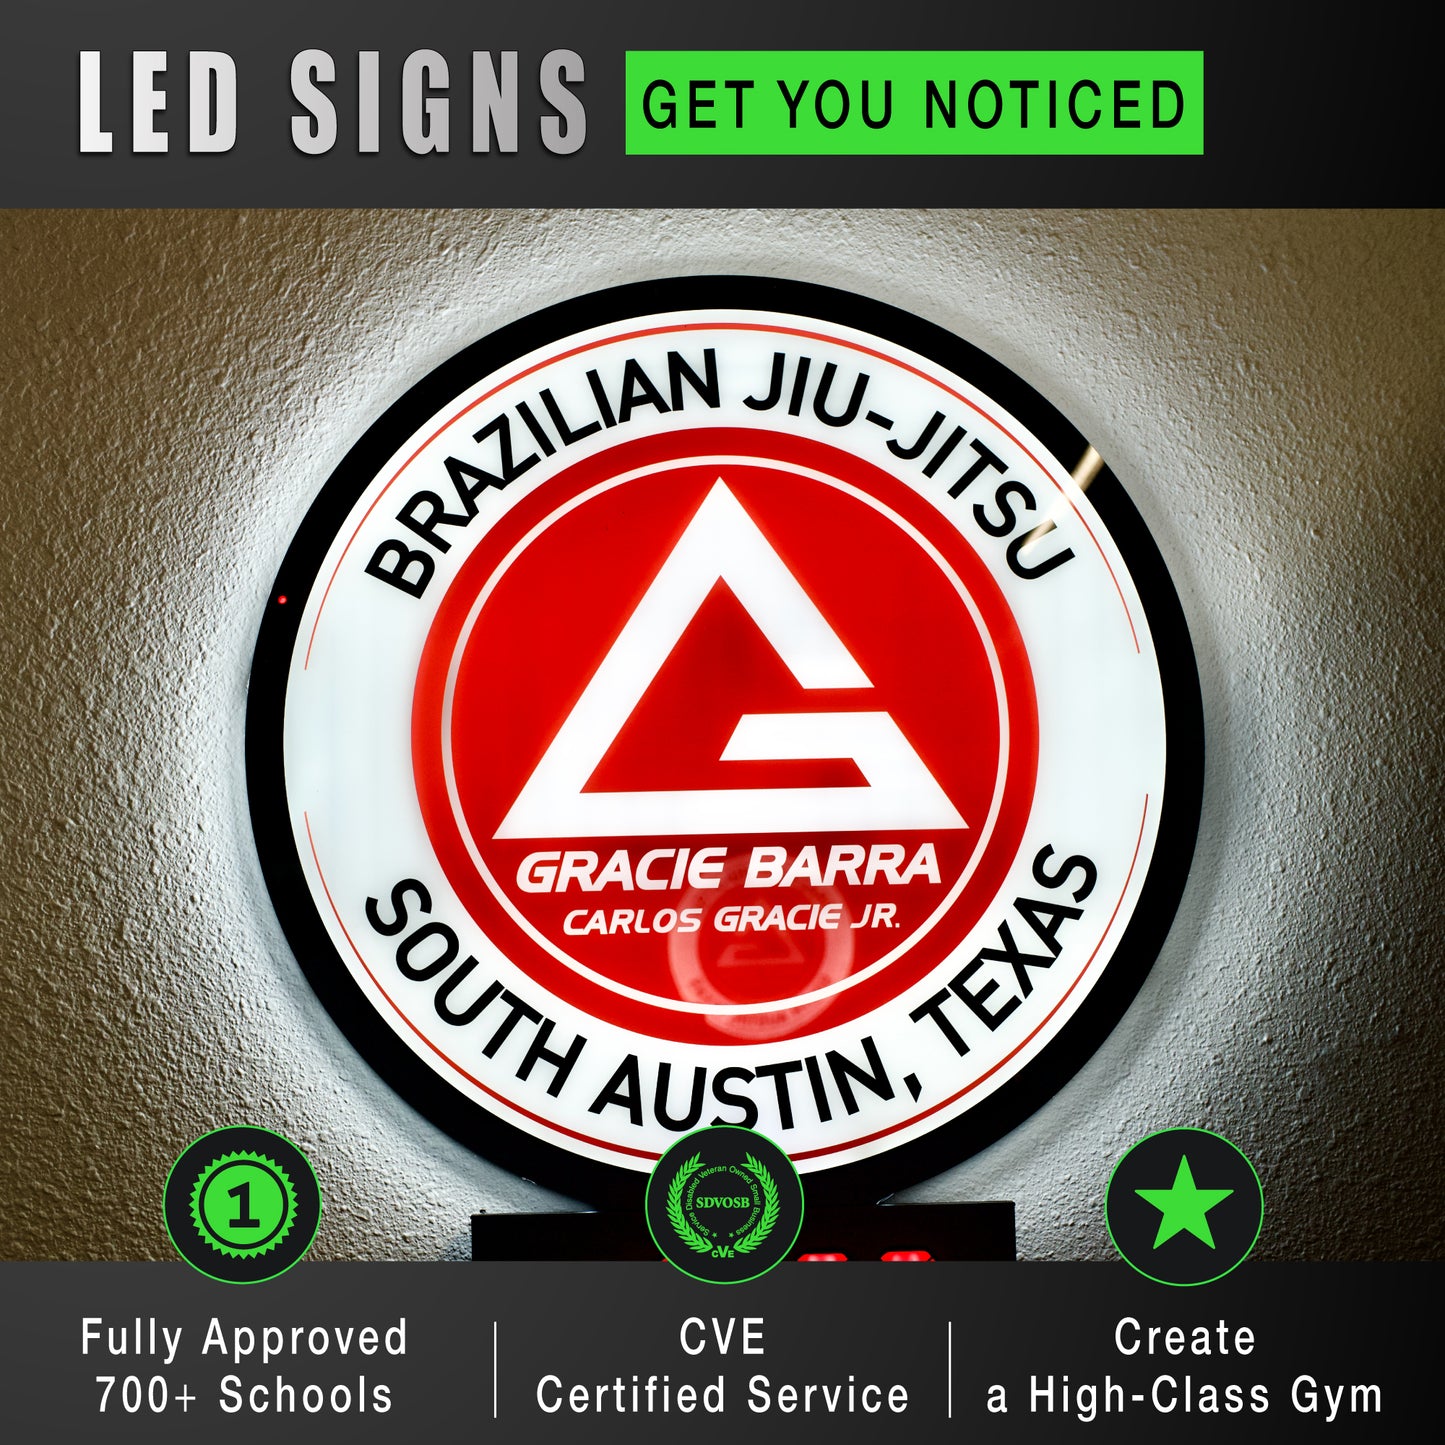 LED Edge & Back Lit School Logo Sign - 15 inches